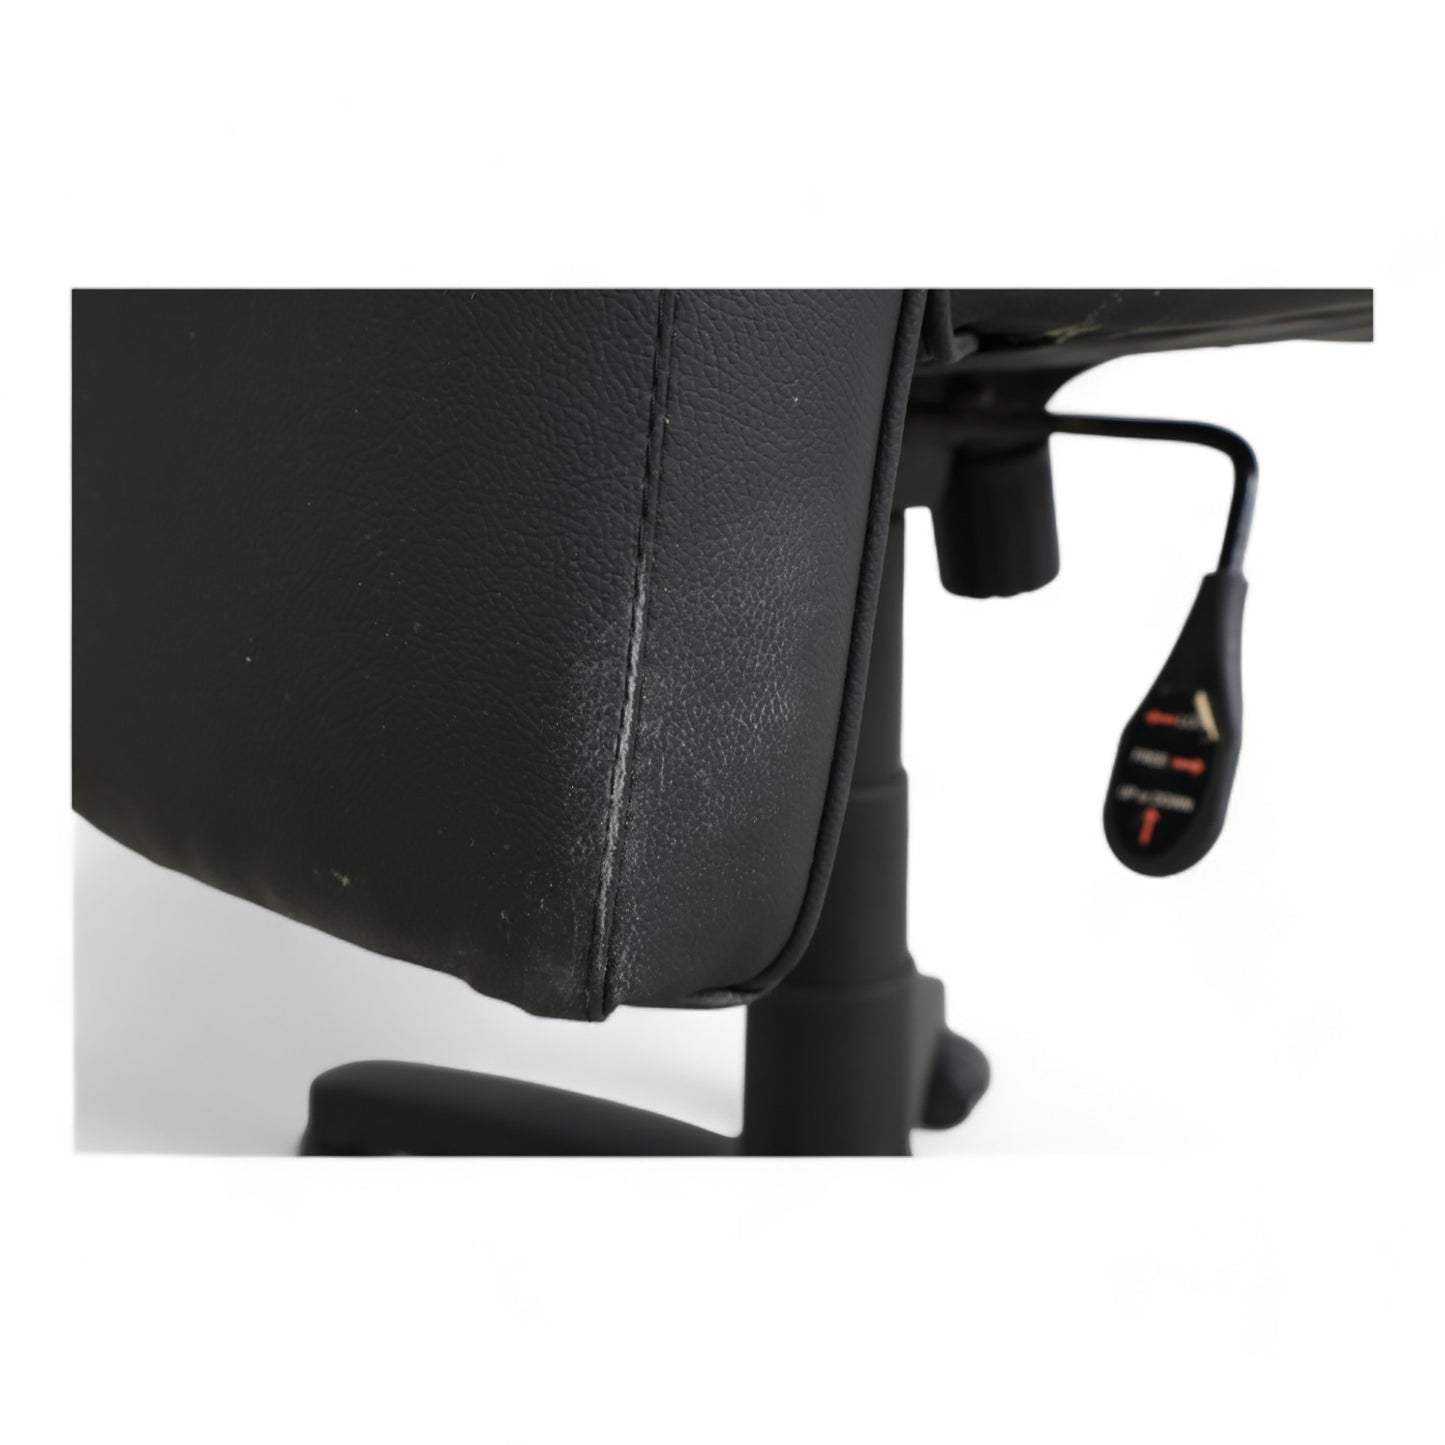 Nyrenset | Sort Damro kontorstol med armlener